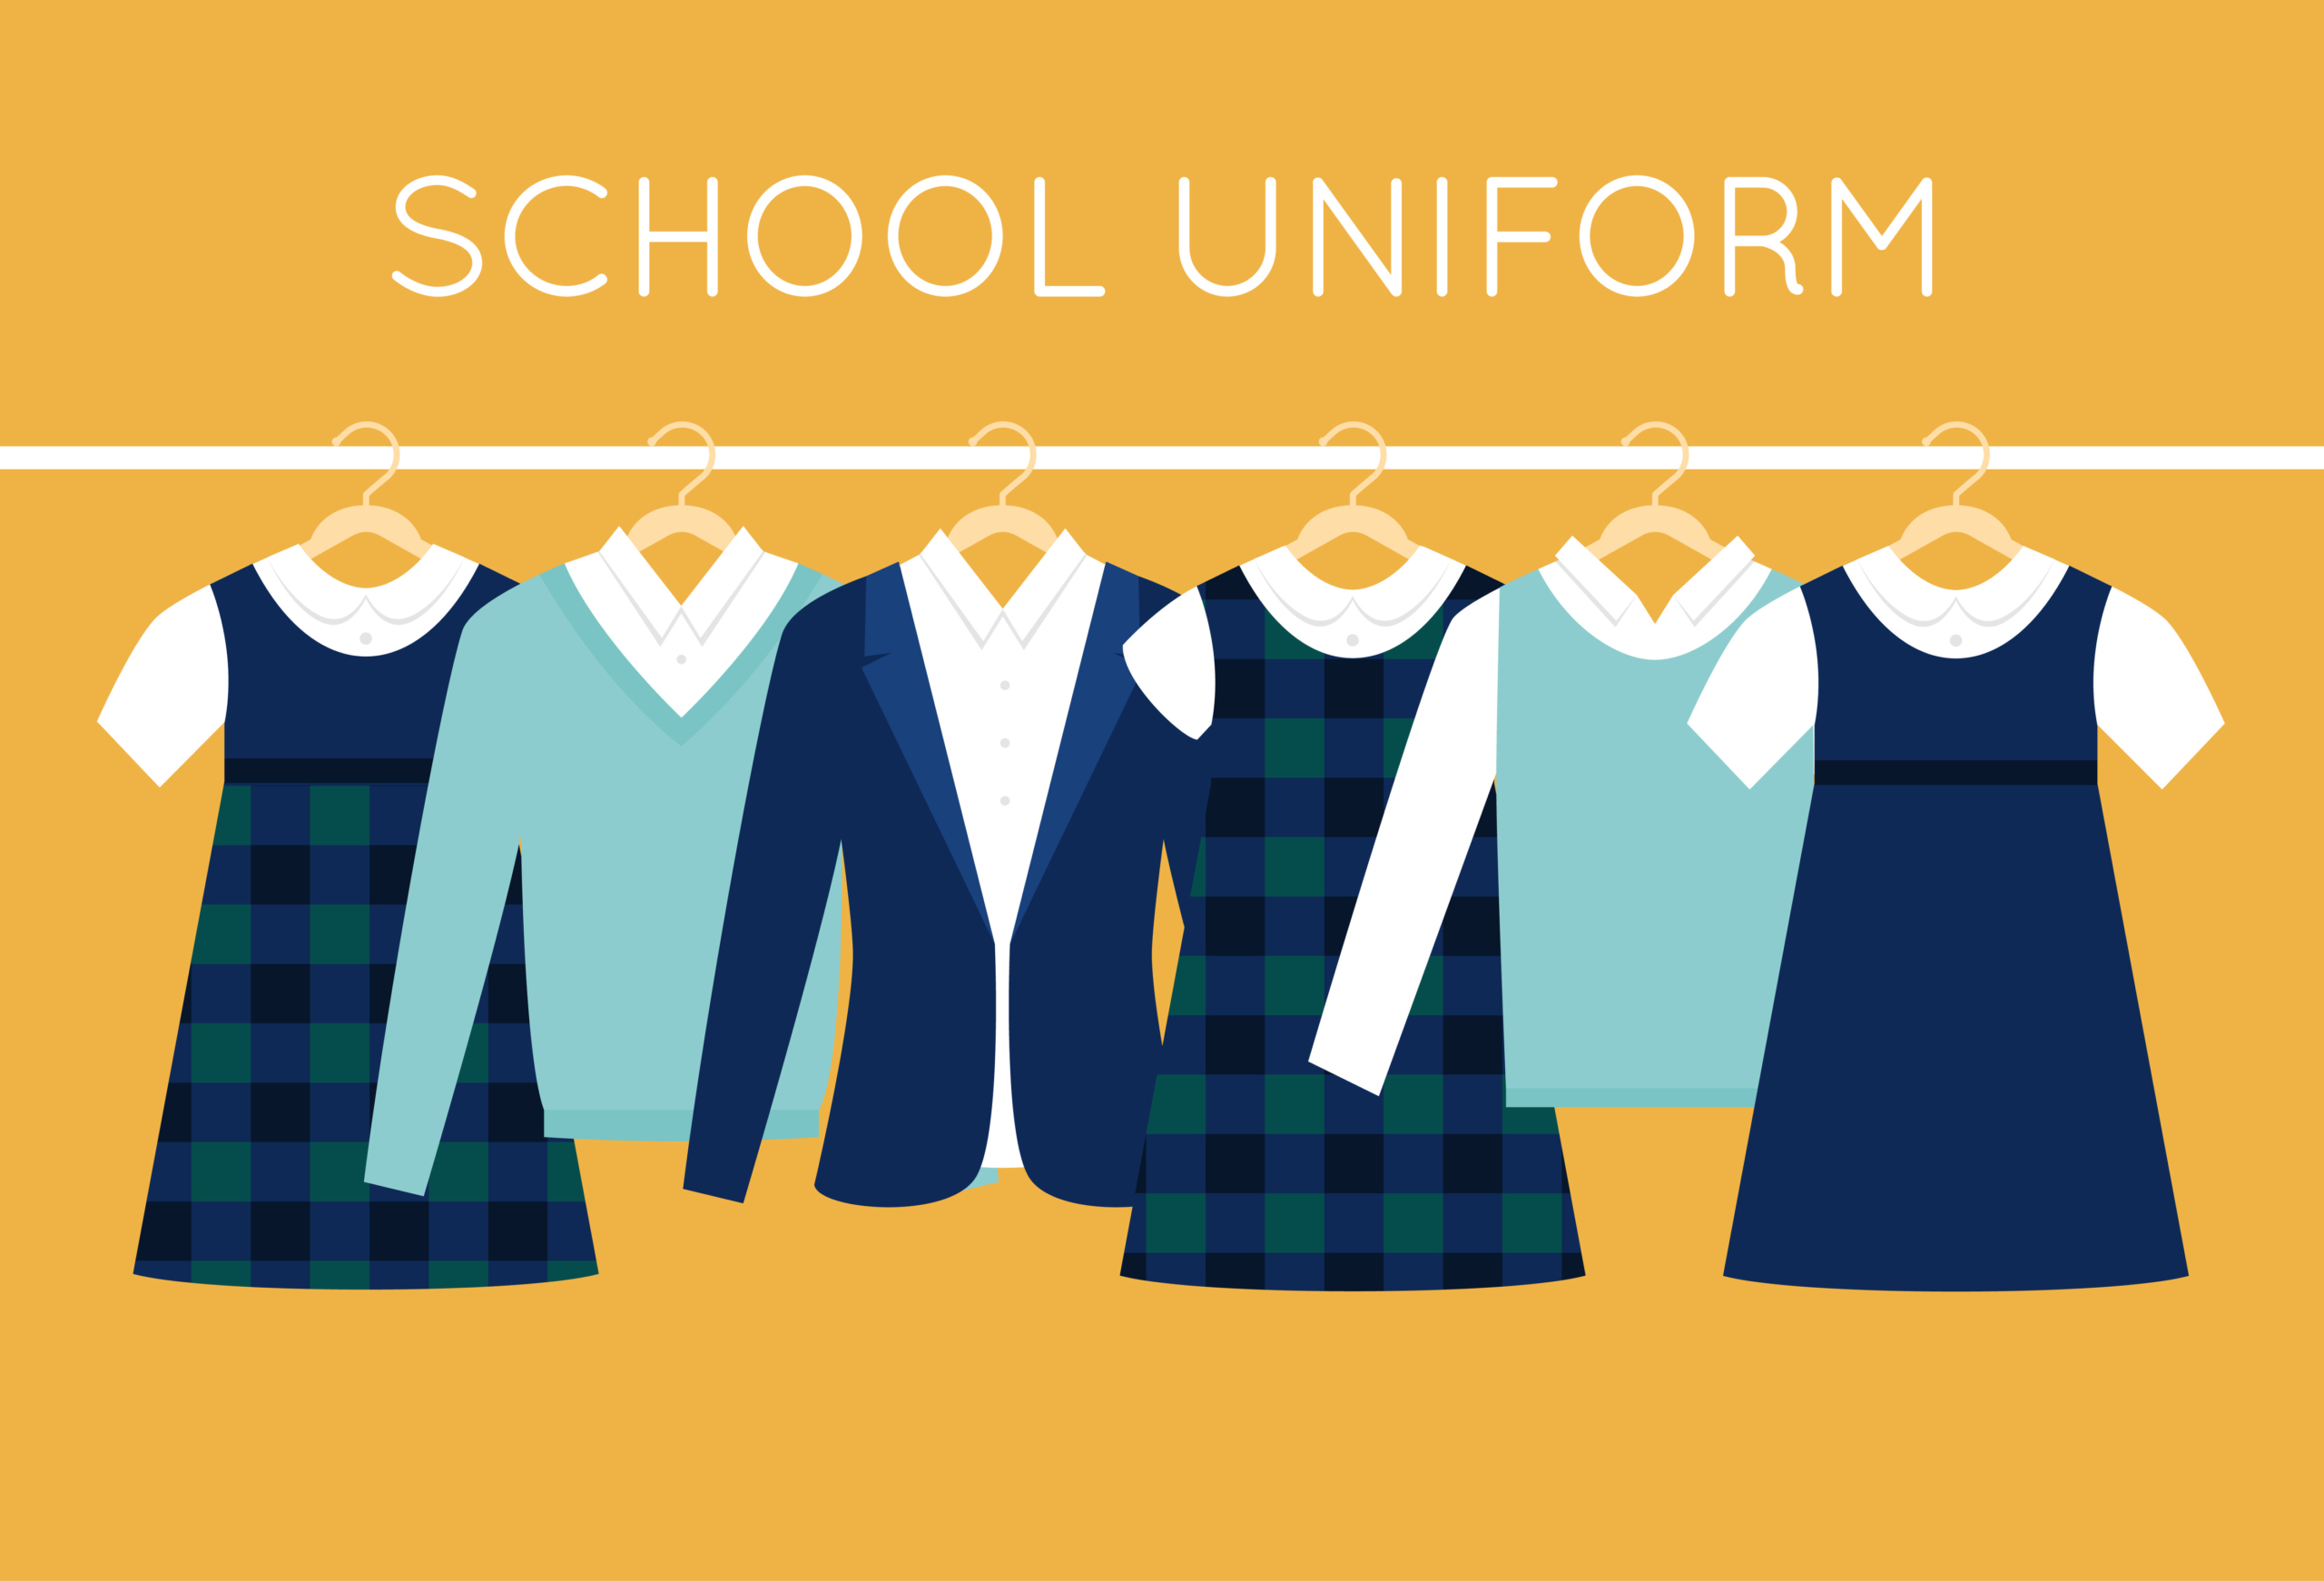 School Uniform for Children and Teenagers on Hangers. Vector Illustration